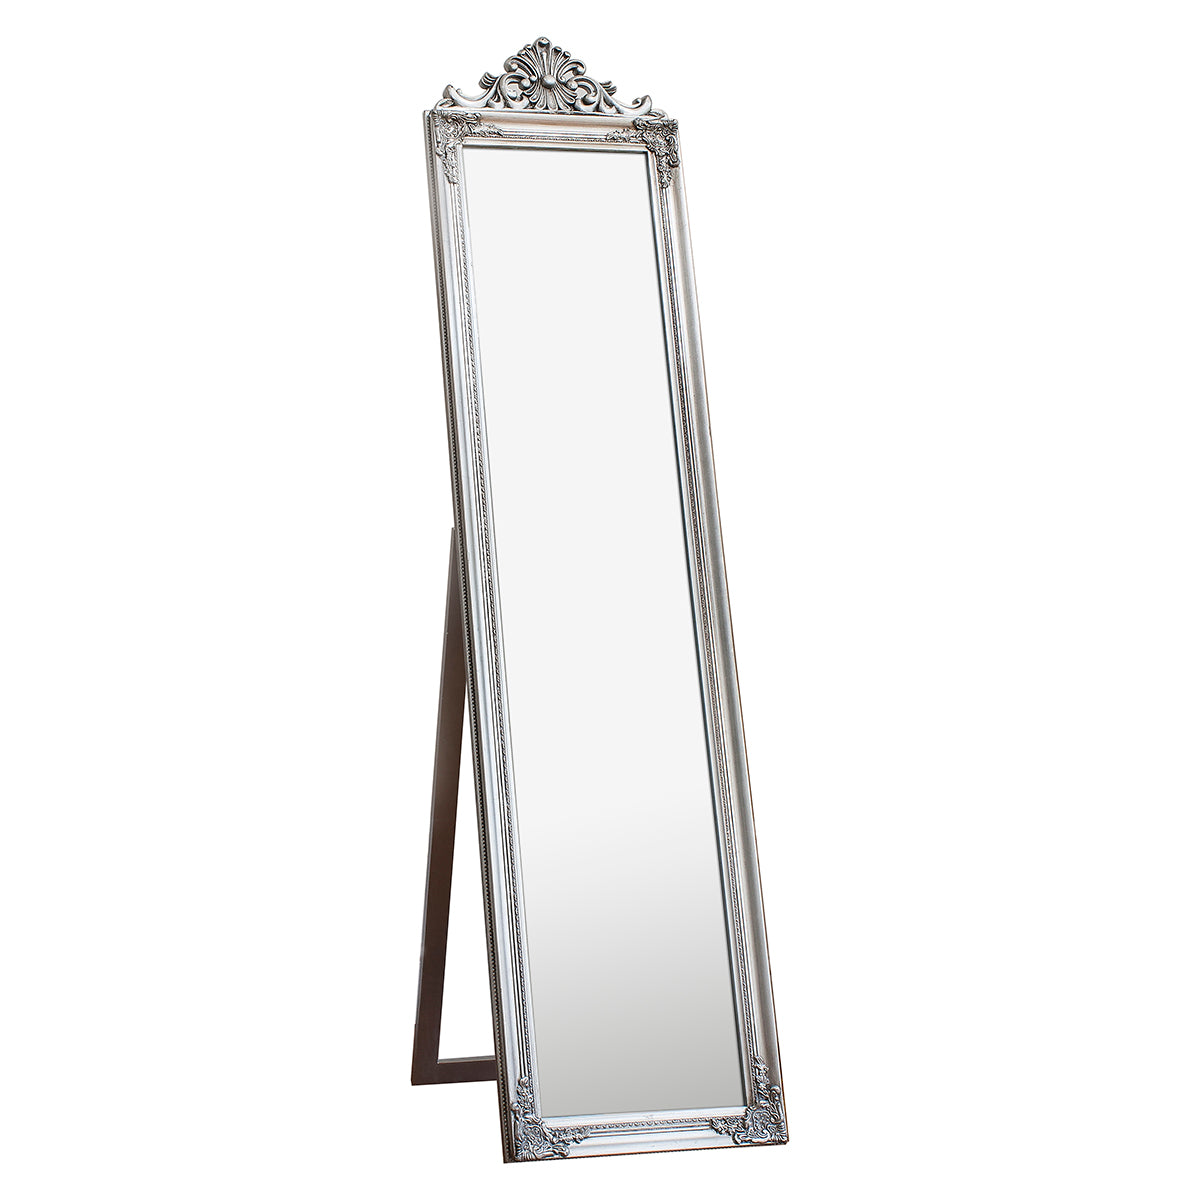 Lambton Wood Cheval Mirror Silver